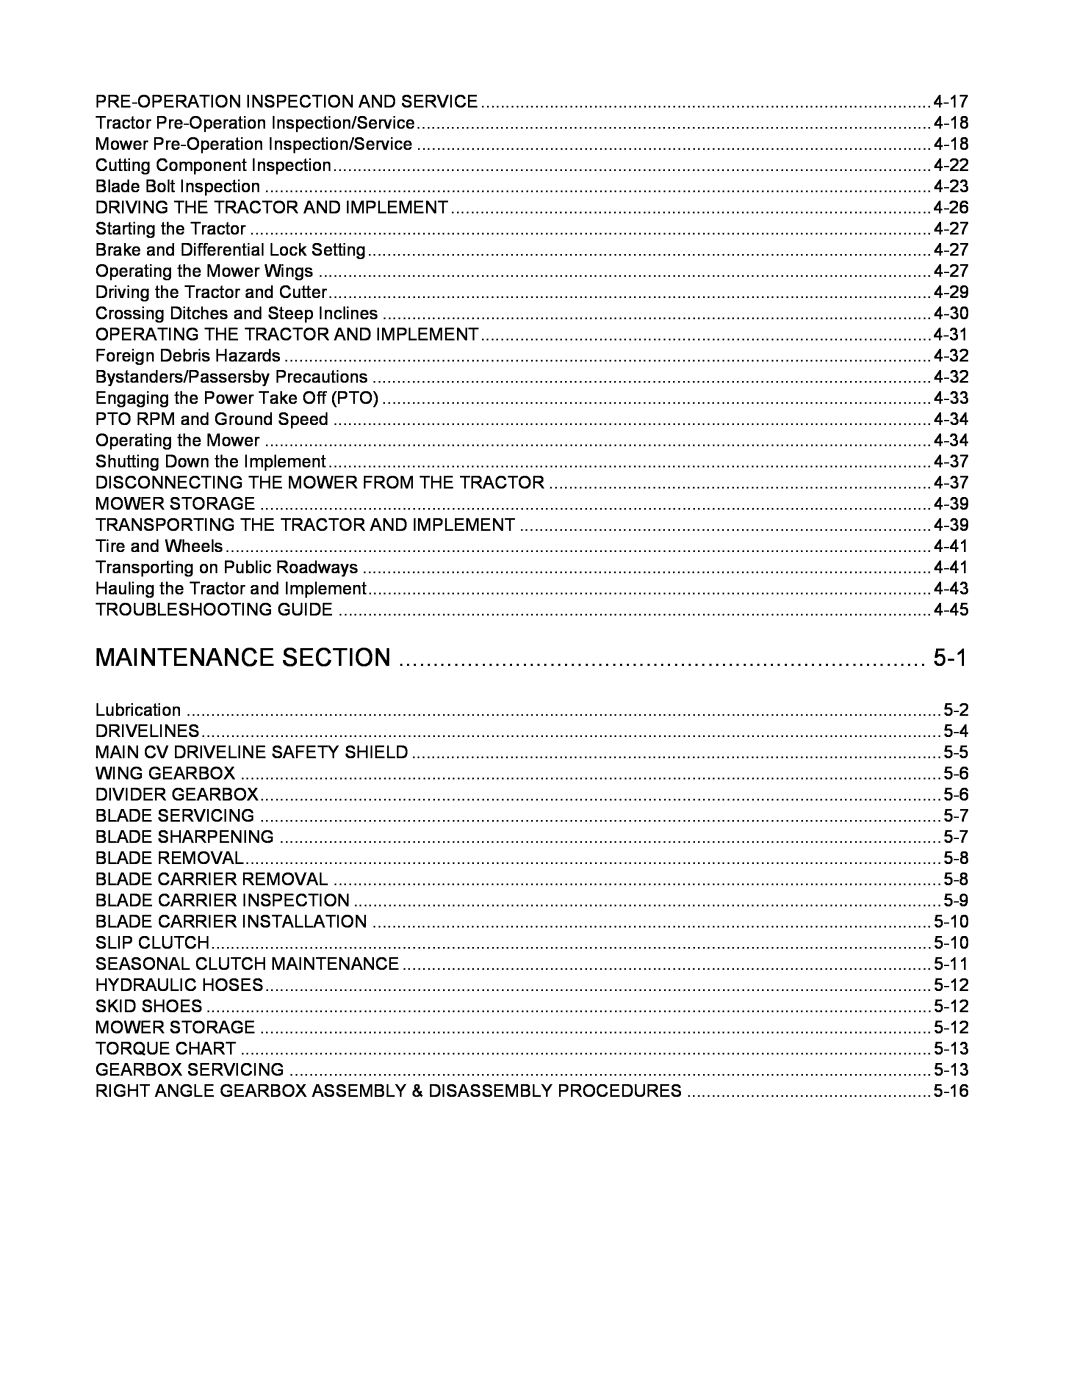 Alamo SX15 manual Maintenance Section 